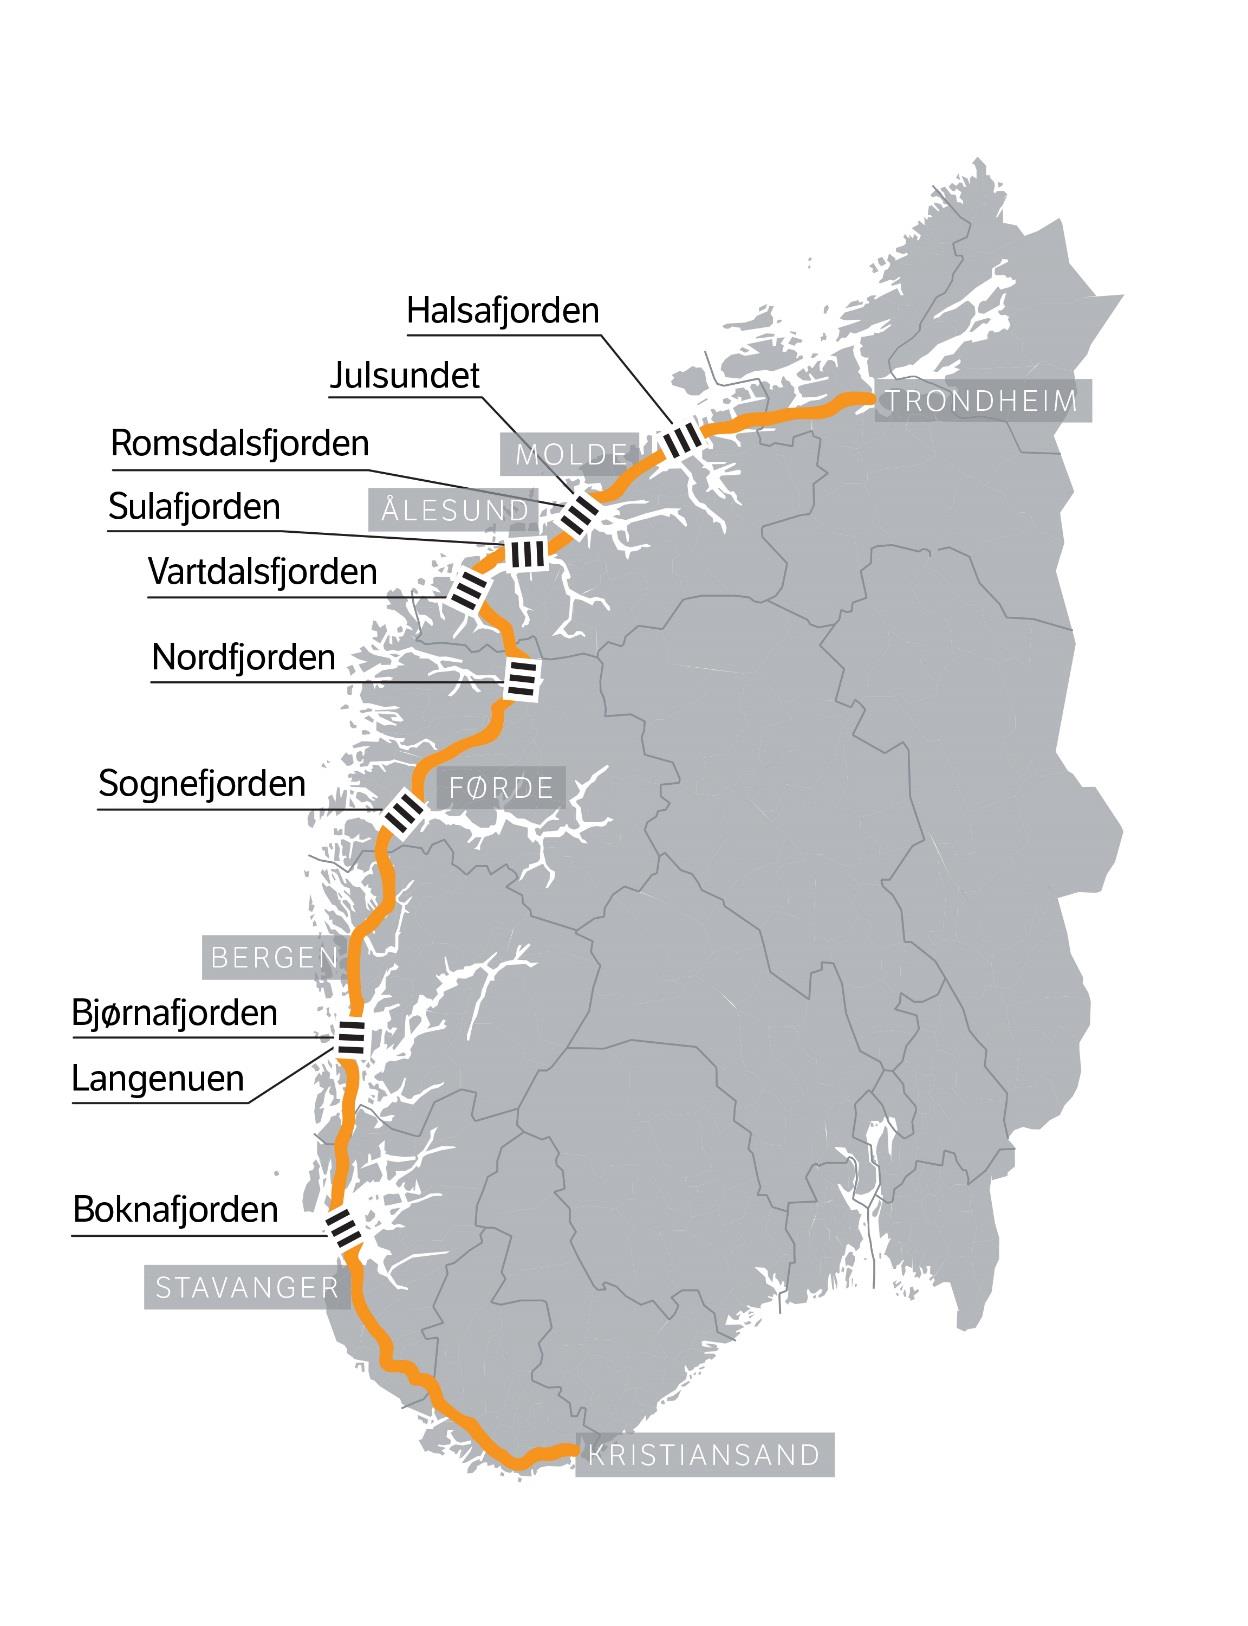 Ferjefri E39 Fjordkrysninger under planlegging 2016 Halsafjorden, 2 km, 5-600 m Romsdalsfjorden, 15,5 km Subsea tunnel 350 MBSL + 1,6 km bridge, 5-600 m Sulafjorden, 3,8 km, 500 m